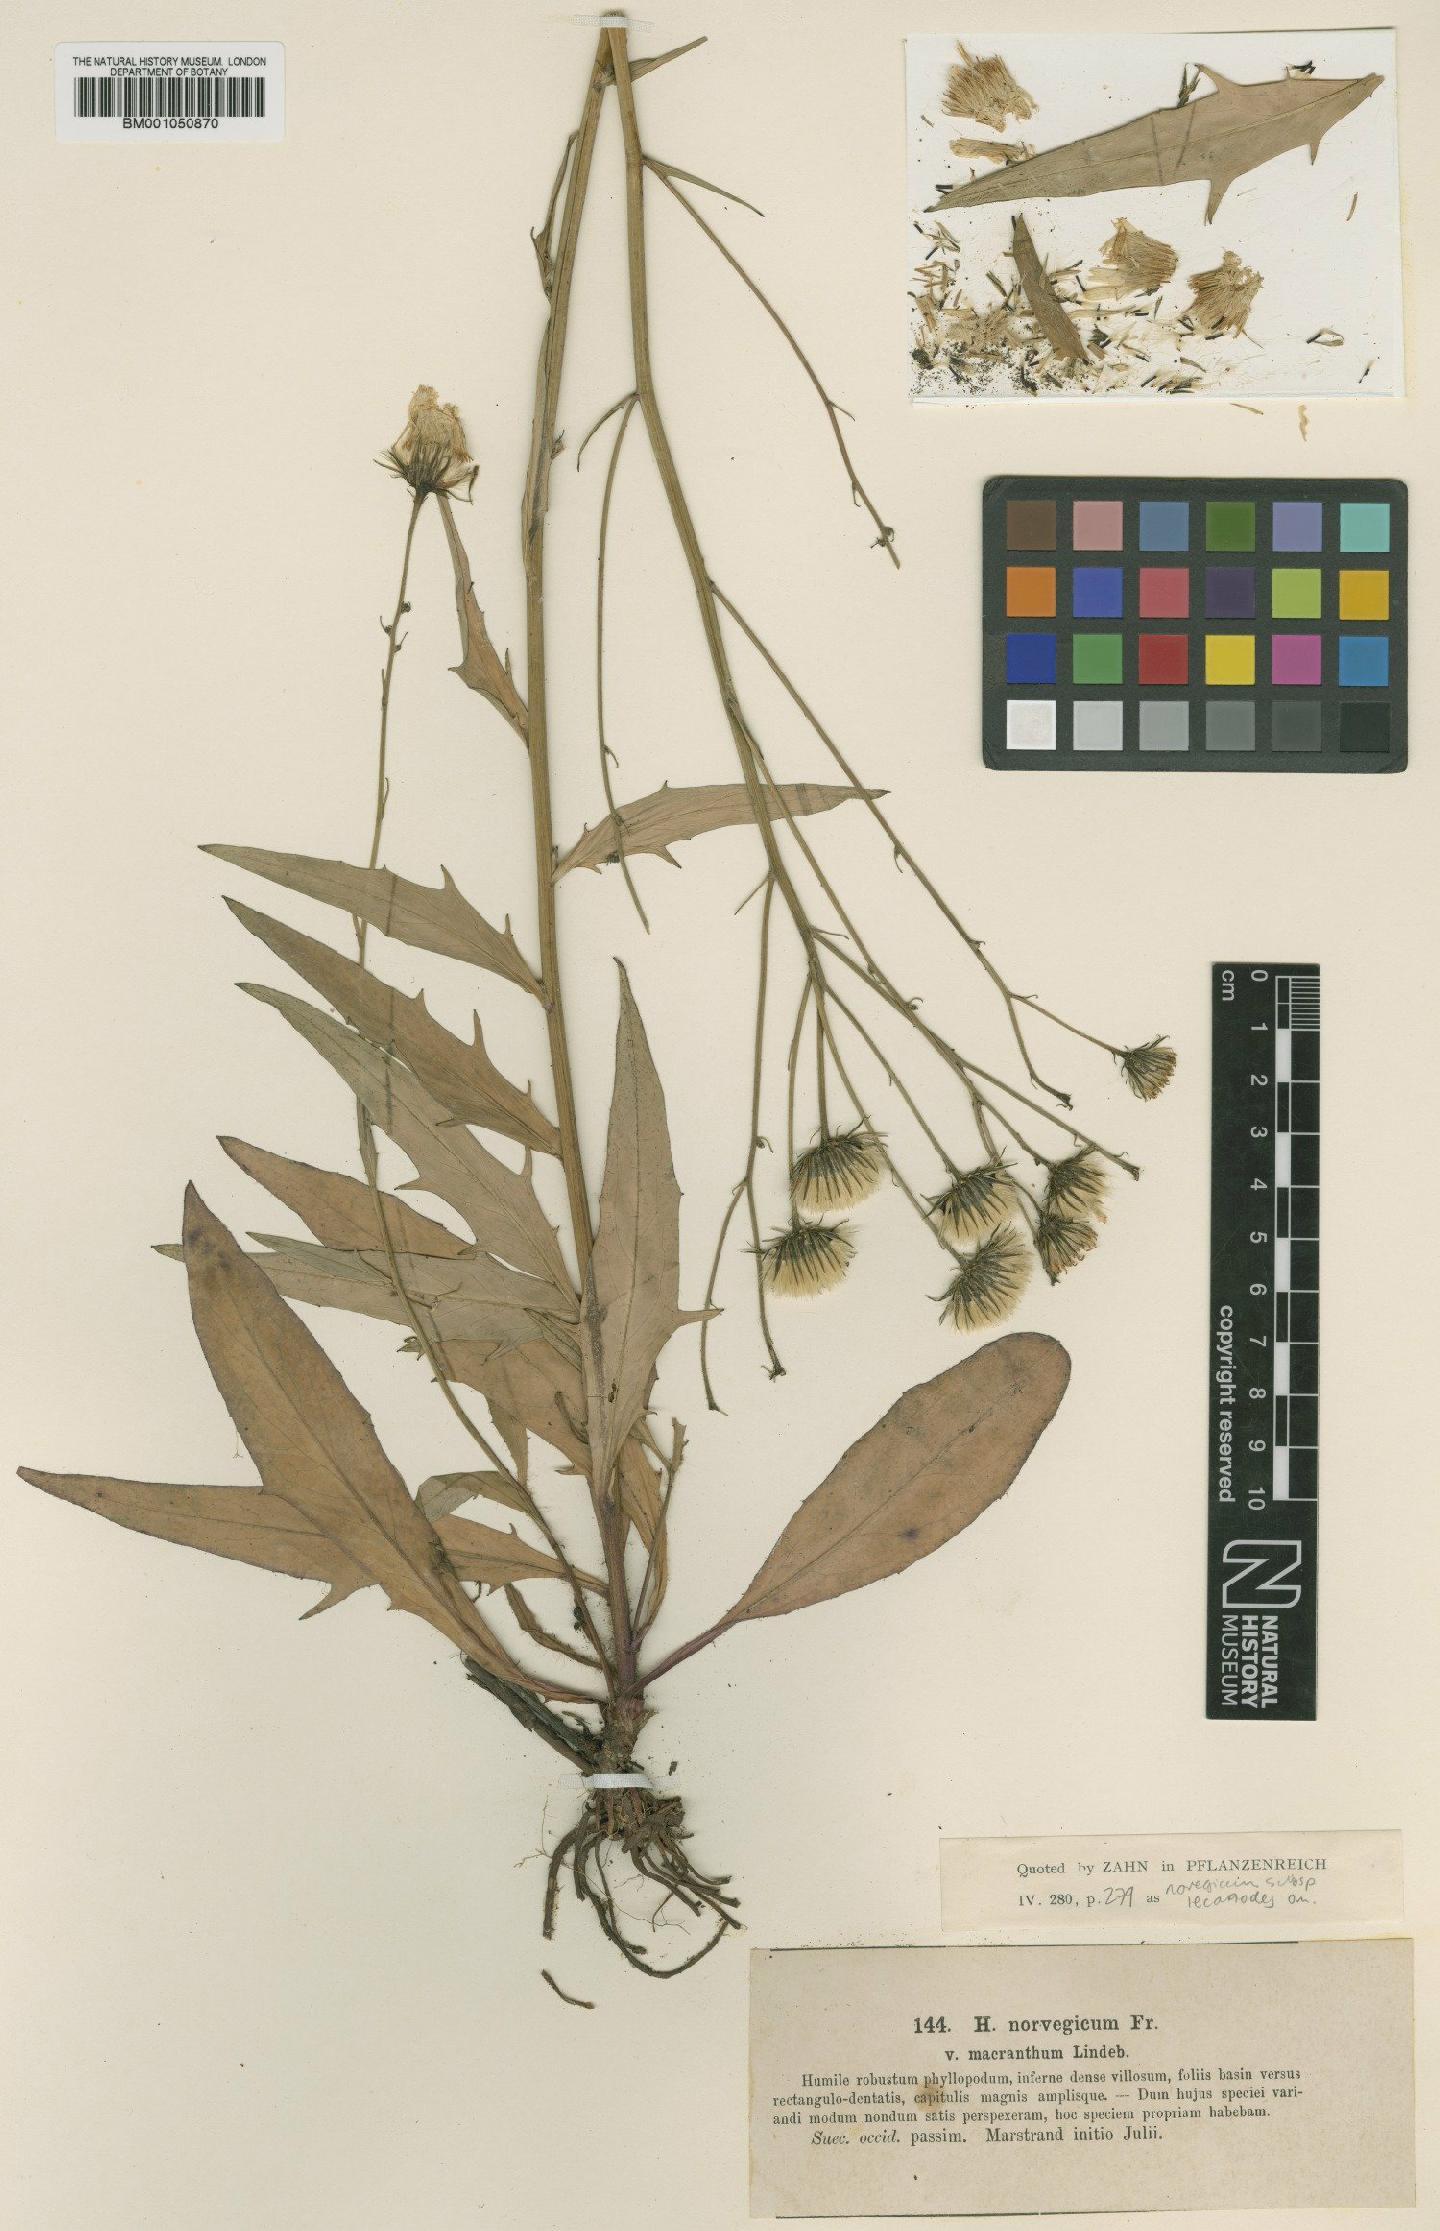 To NHMUK collection (Hieracium norvegicum subsp. lecanodes (Omang) Zahn; TYPE; NHMUK:ecatalogue:2400109)